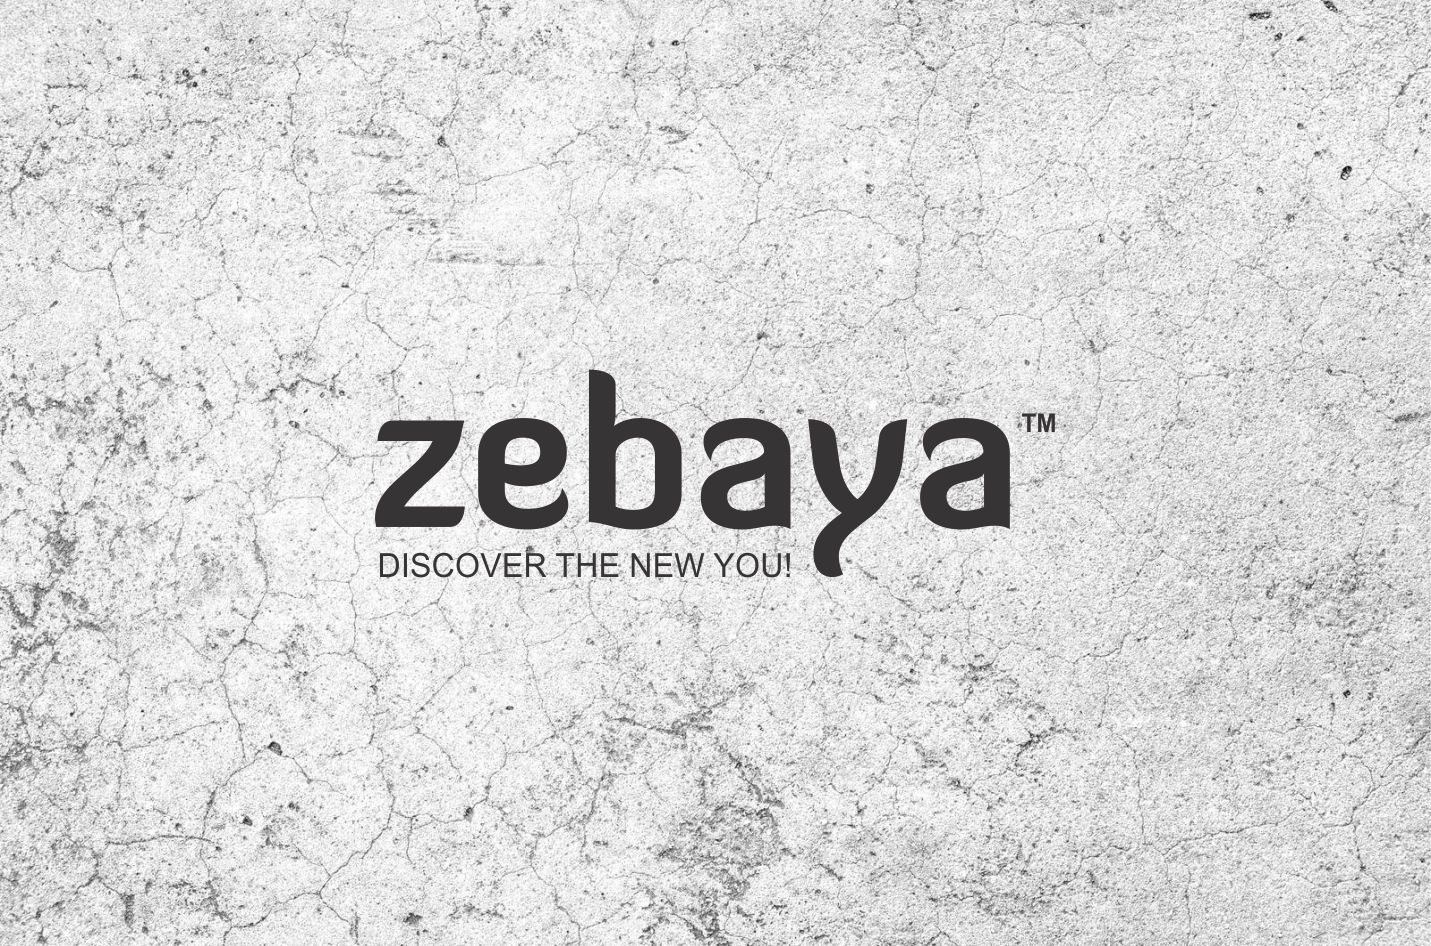 Showing something simple online in zabaya